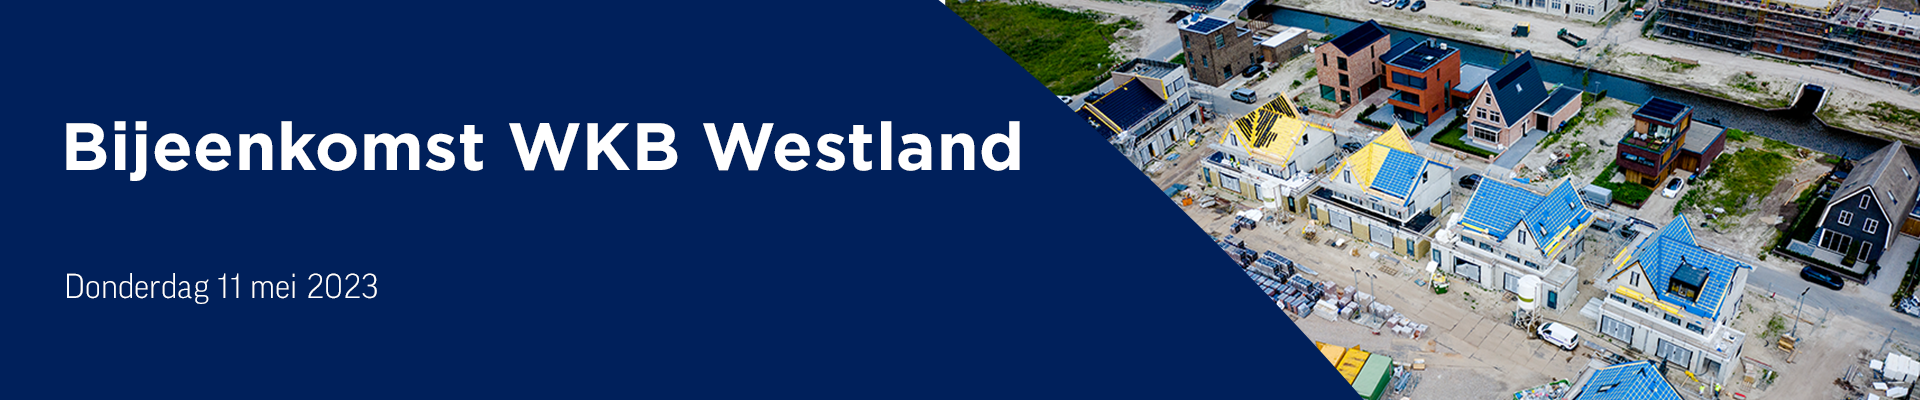 Bijeenkomst WKB Westland